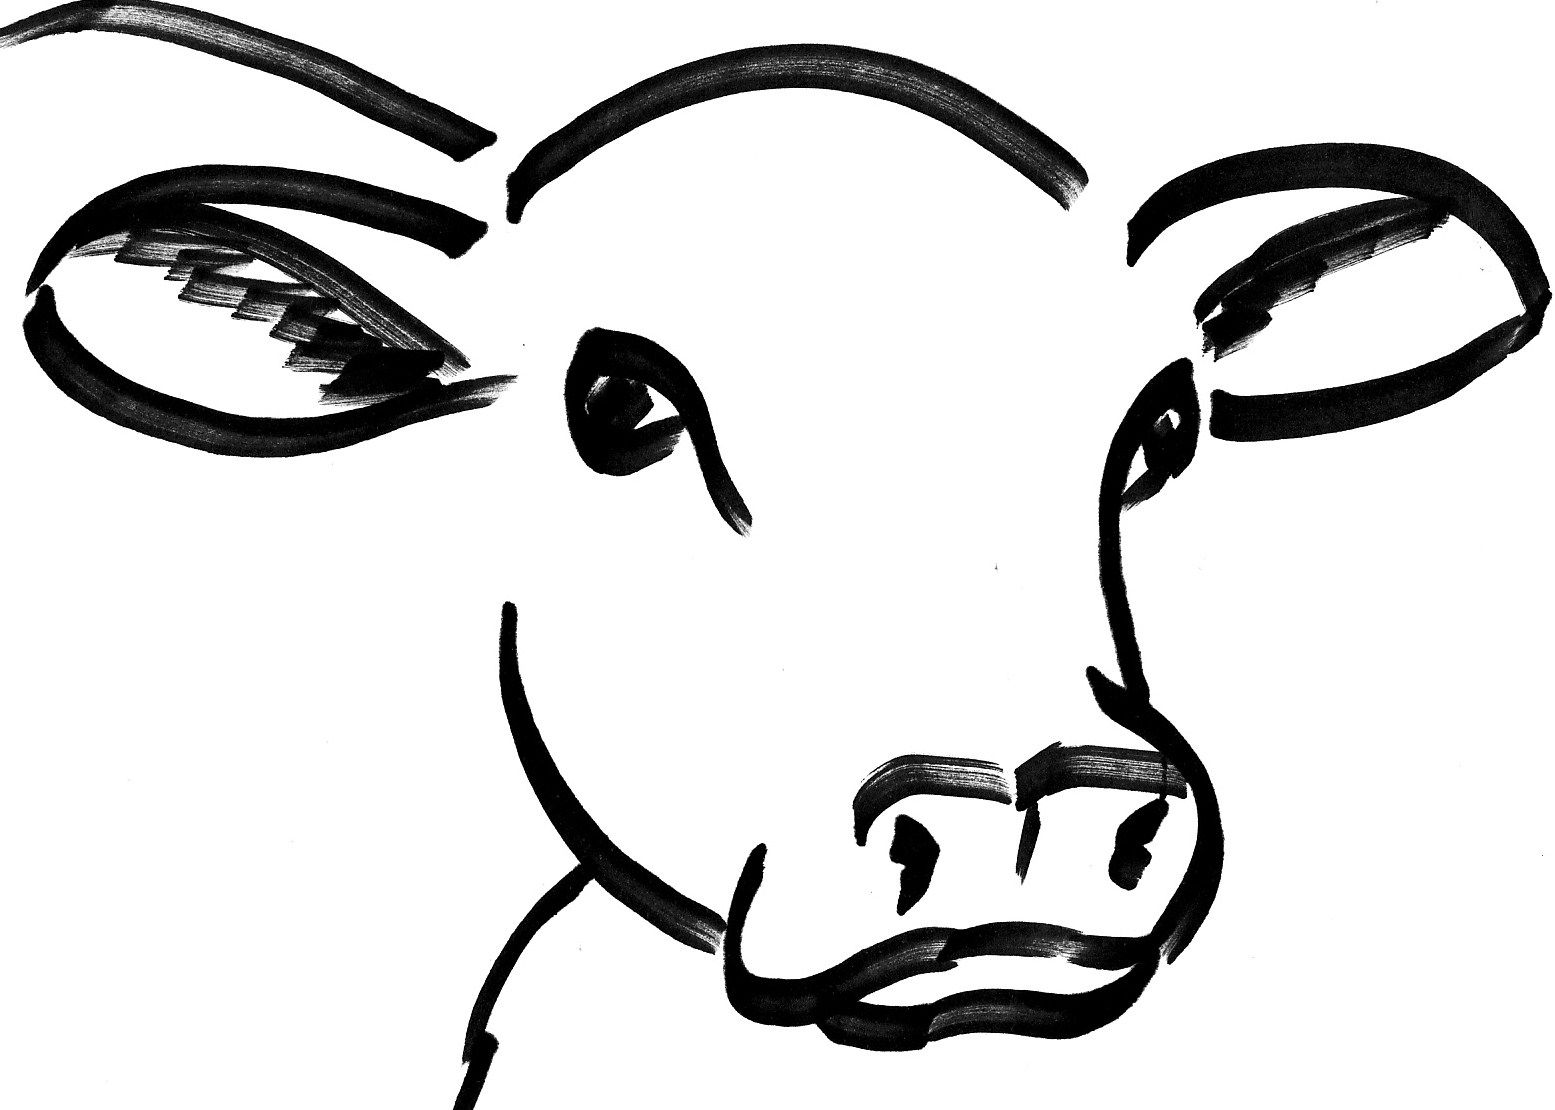 Голова коровы